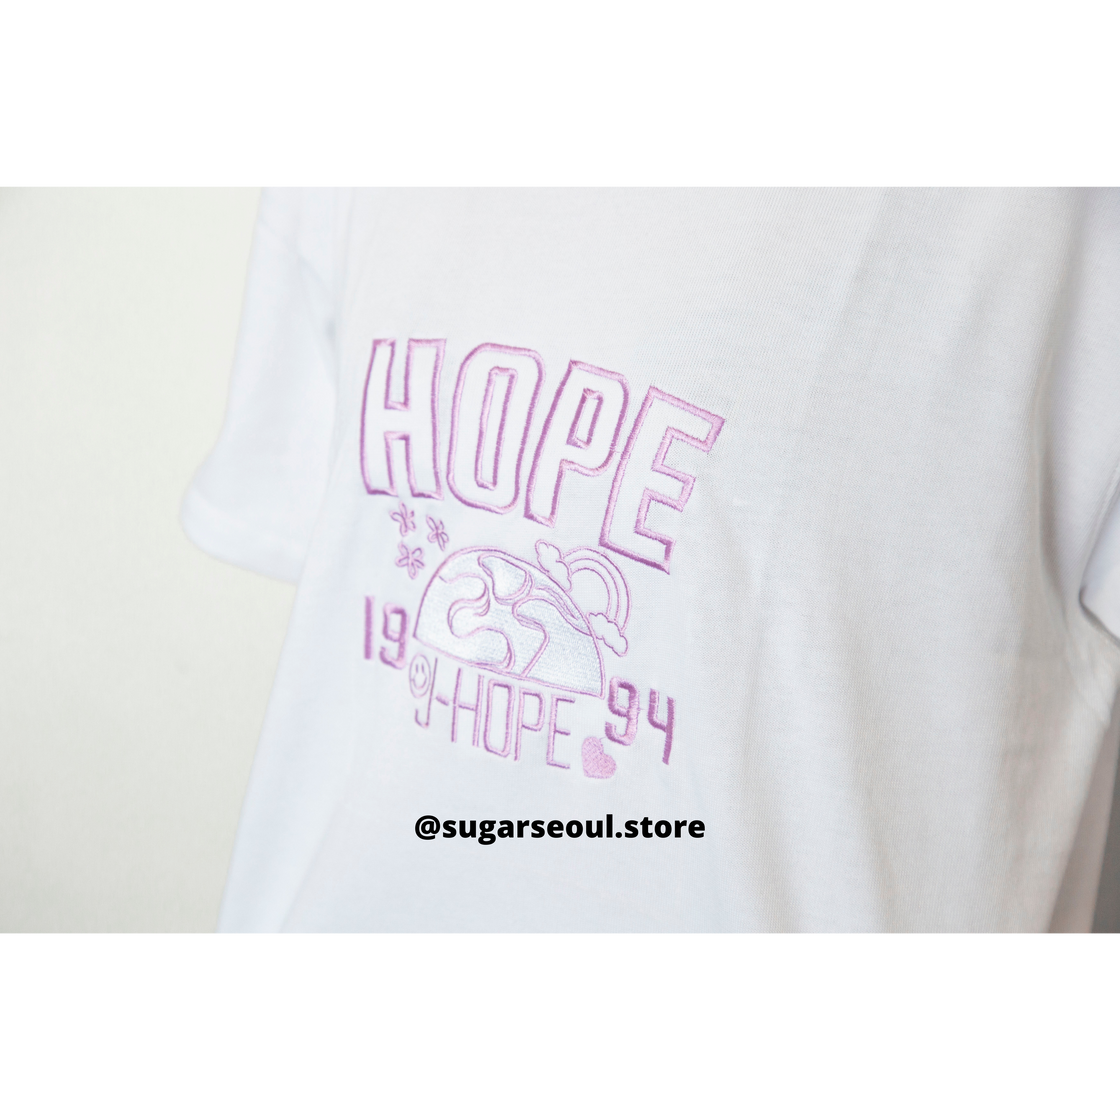 Hope World- T-shirt